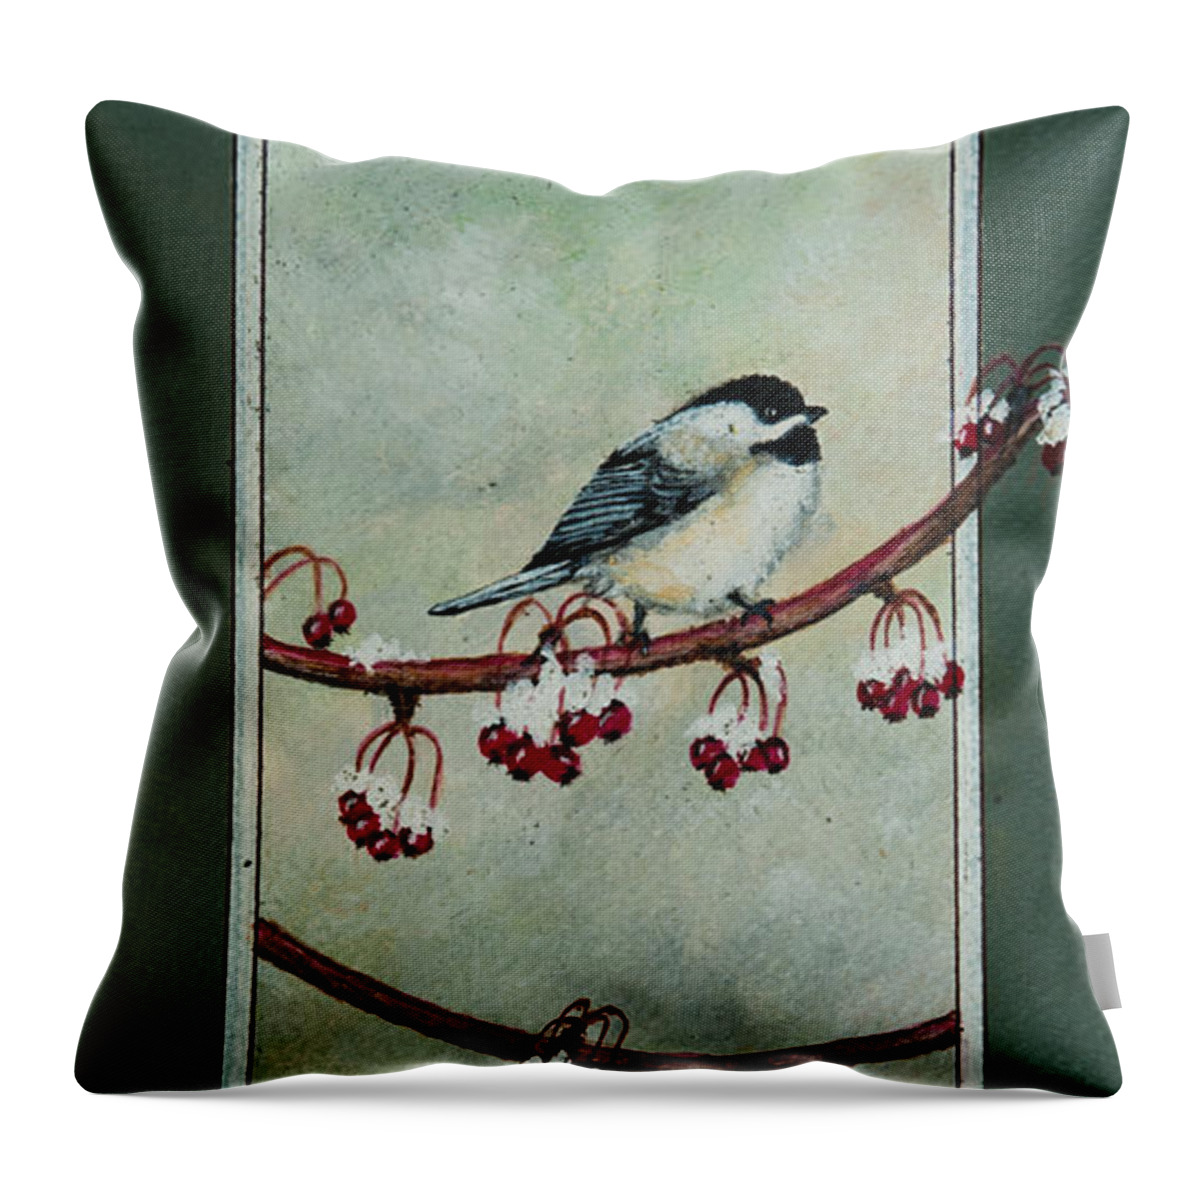 Chickadee Throw Pillow featuring the painting Chickadee by Elizabeth Mundaden